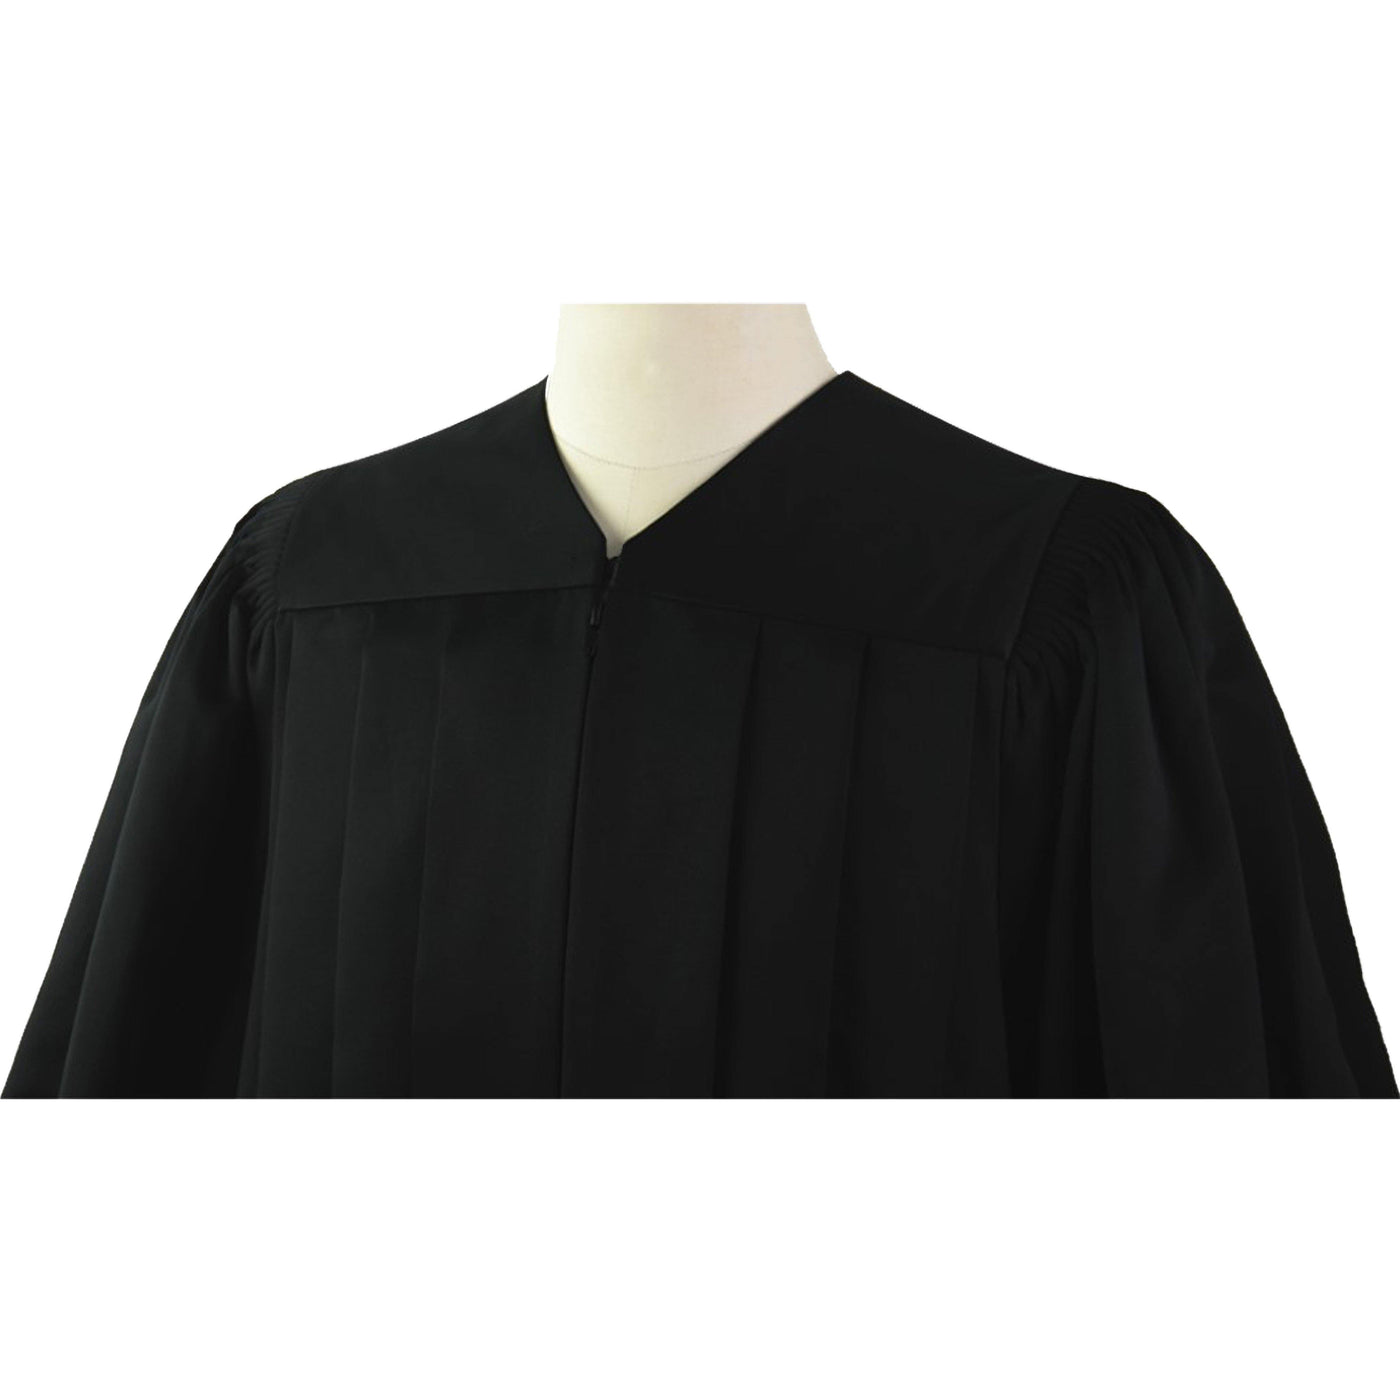 Pontiff Judge Robe - Judicial Shop